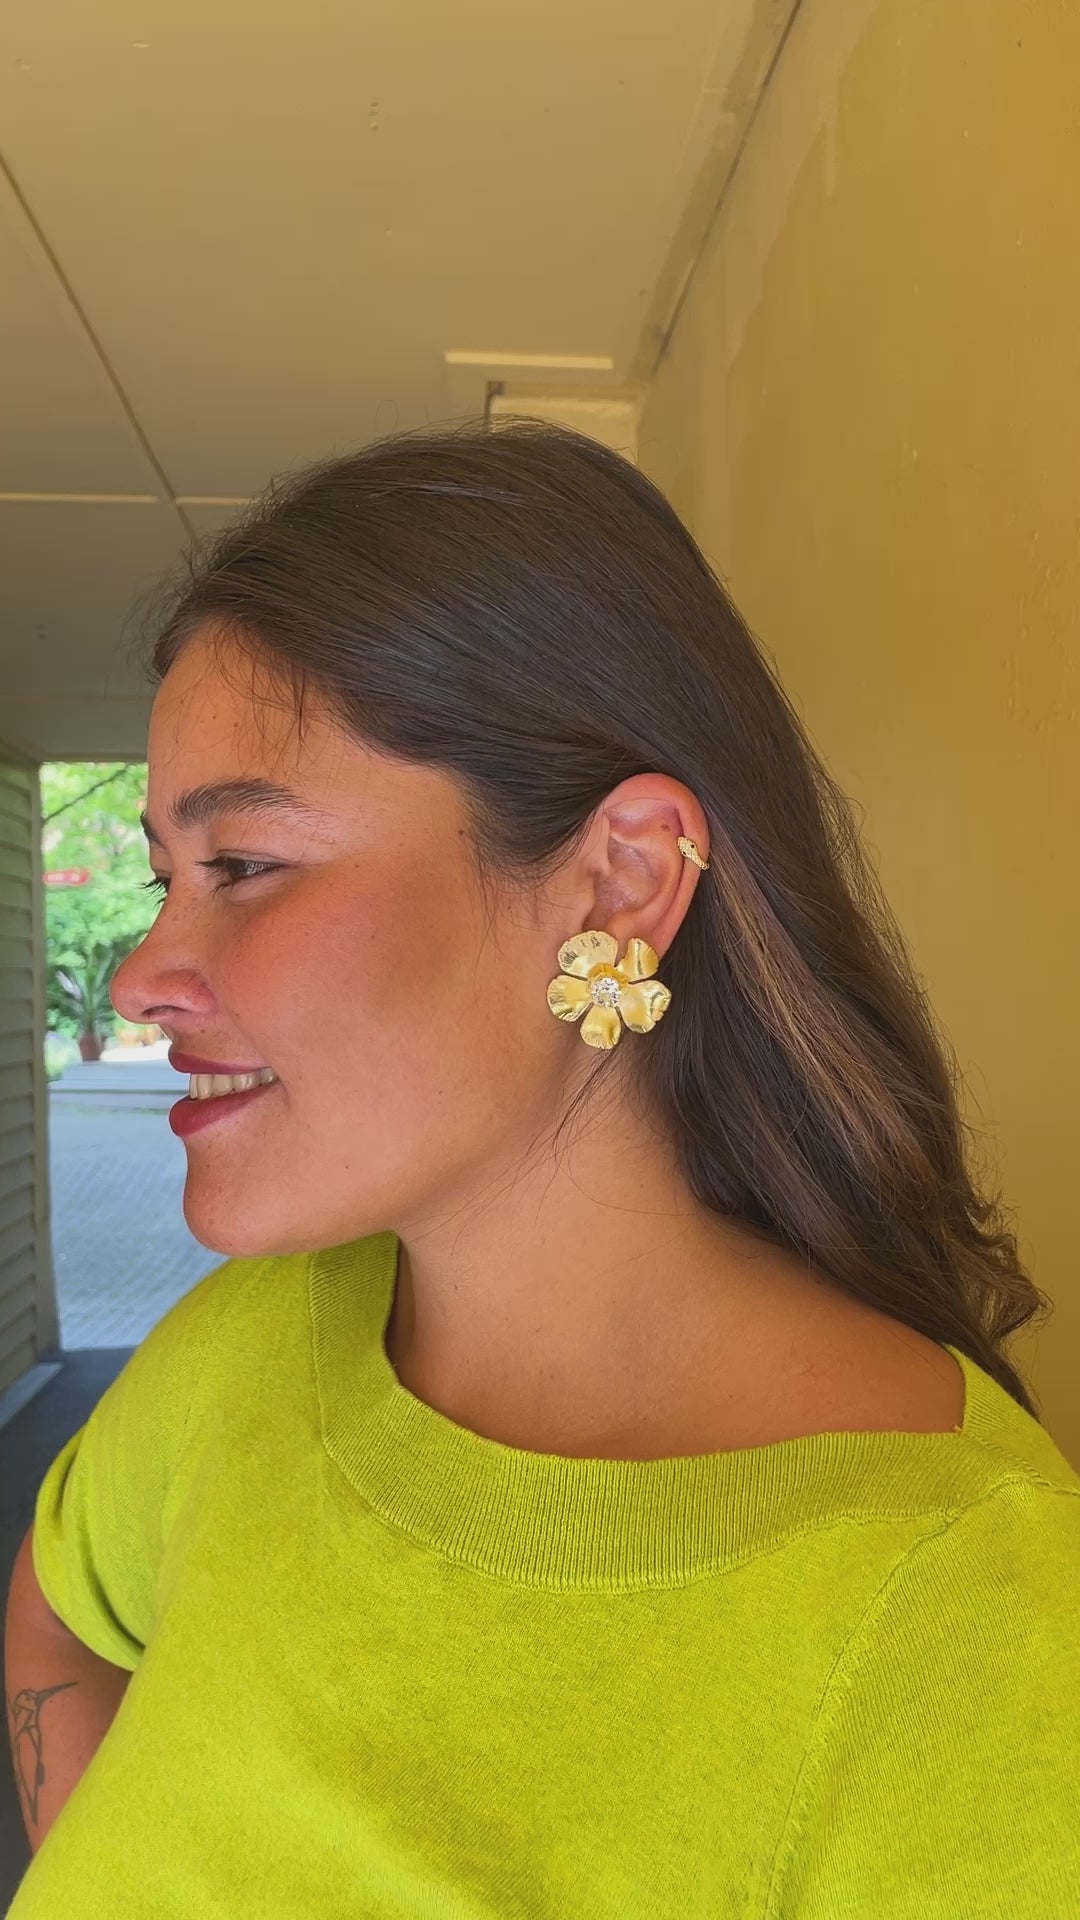 Anemone earrings